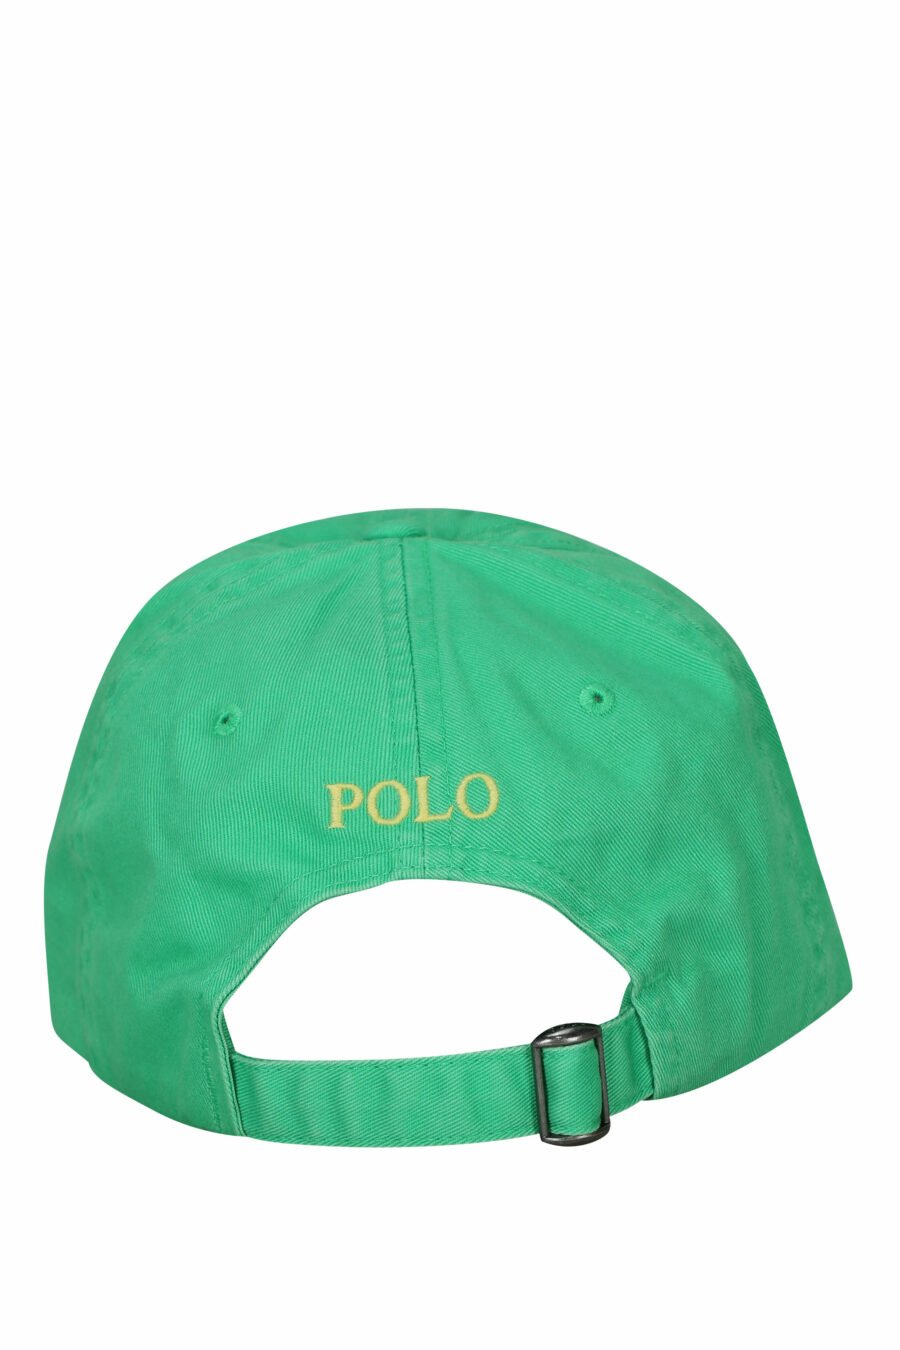 Green cap with mini-logo "polo" - 3616535875623 1